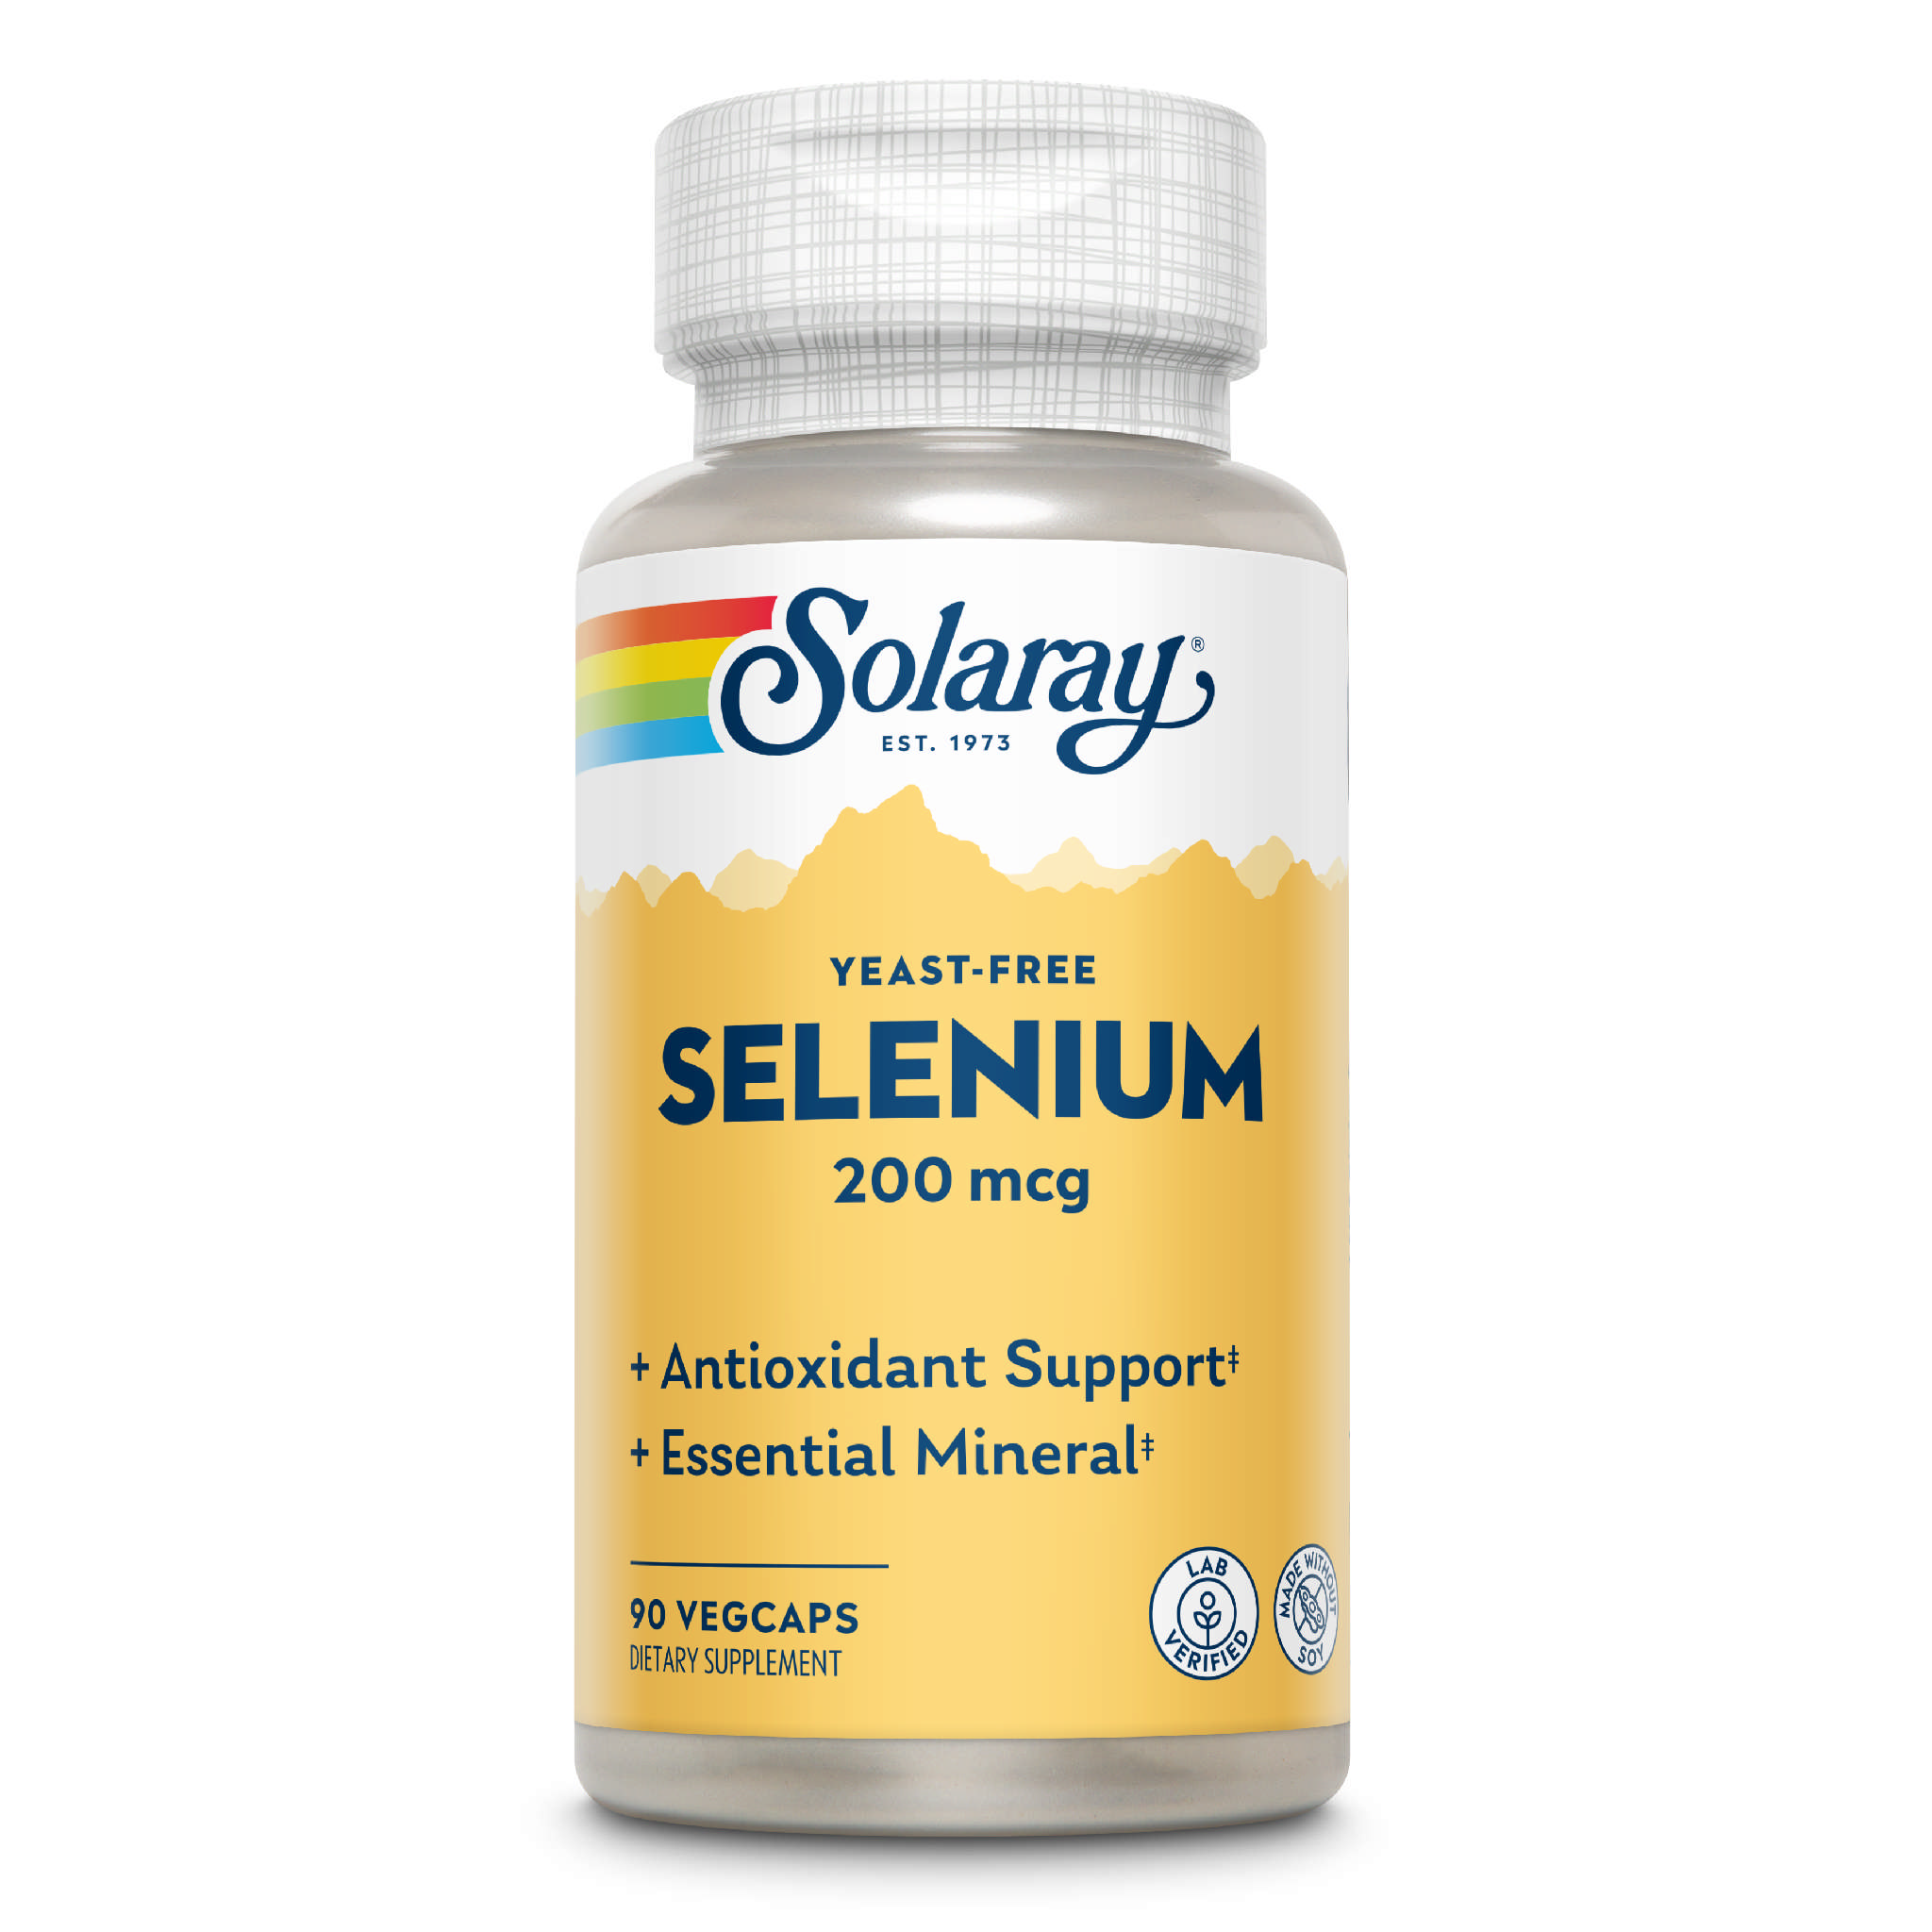 Solaray - Selenium 200 mcg Y/F